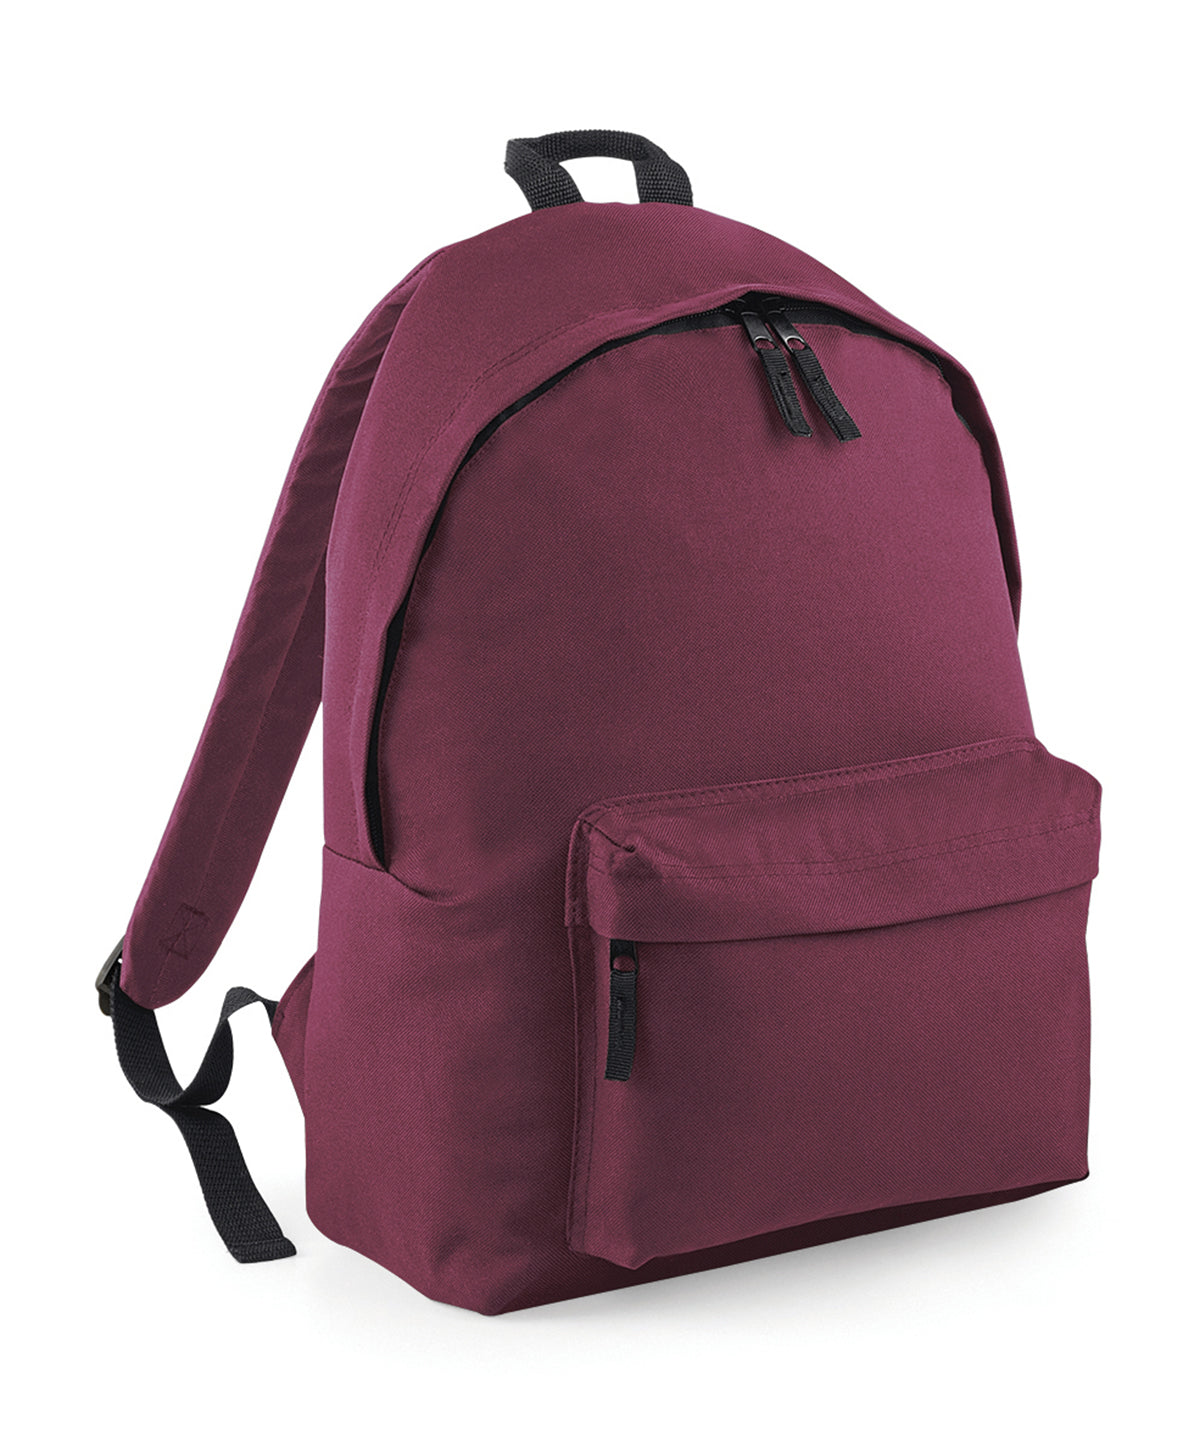 Personalised Bags - Burgundy Bagbase Original fashion backpack